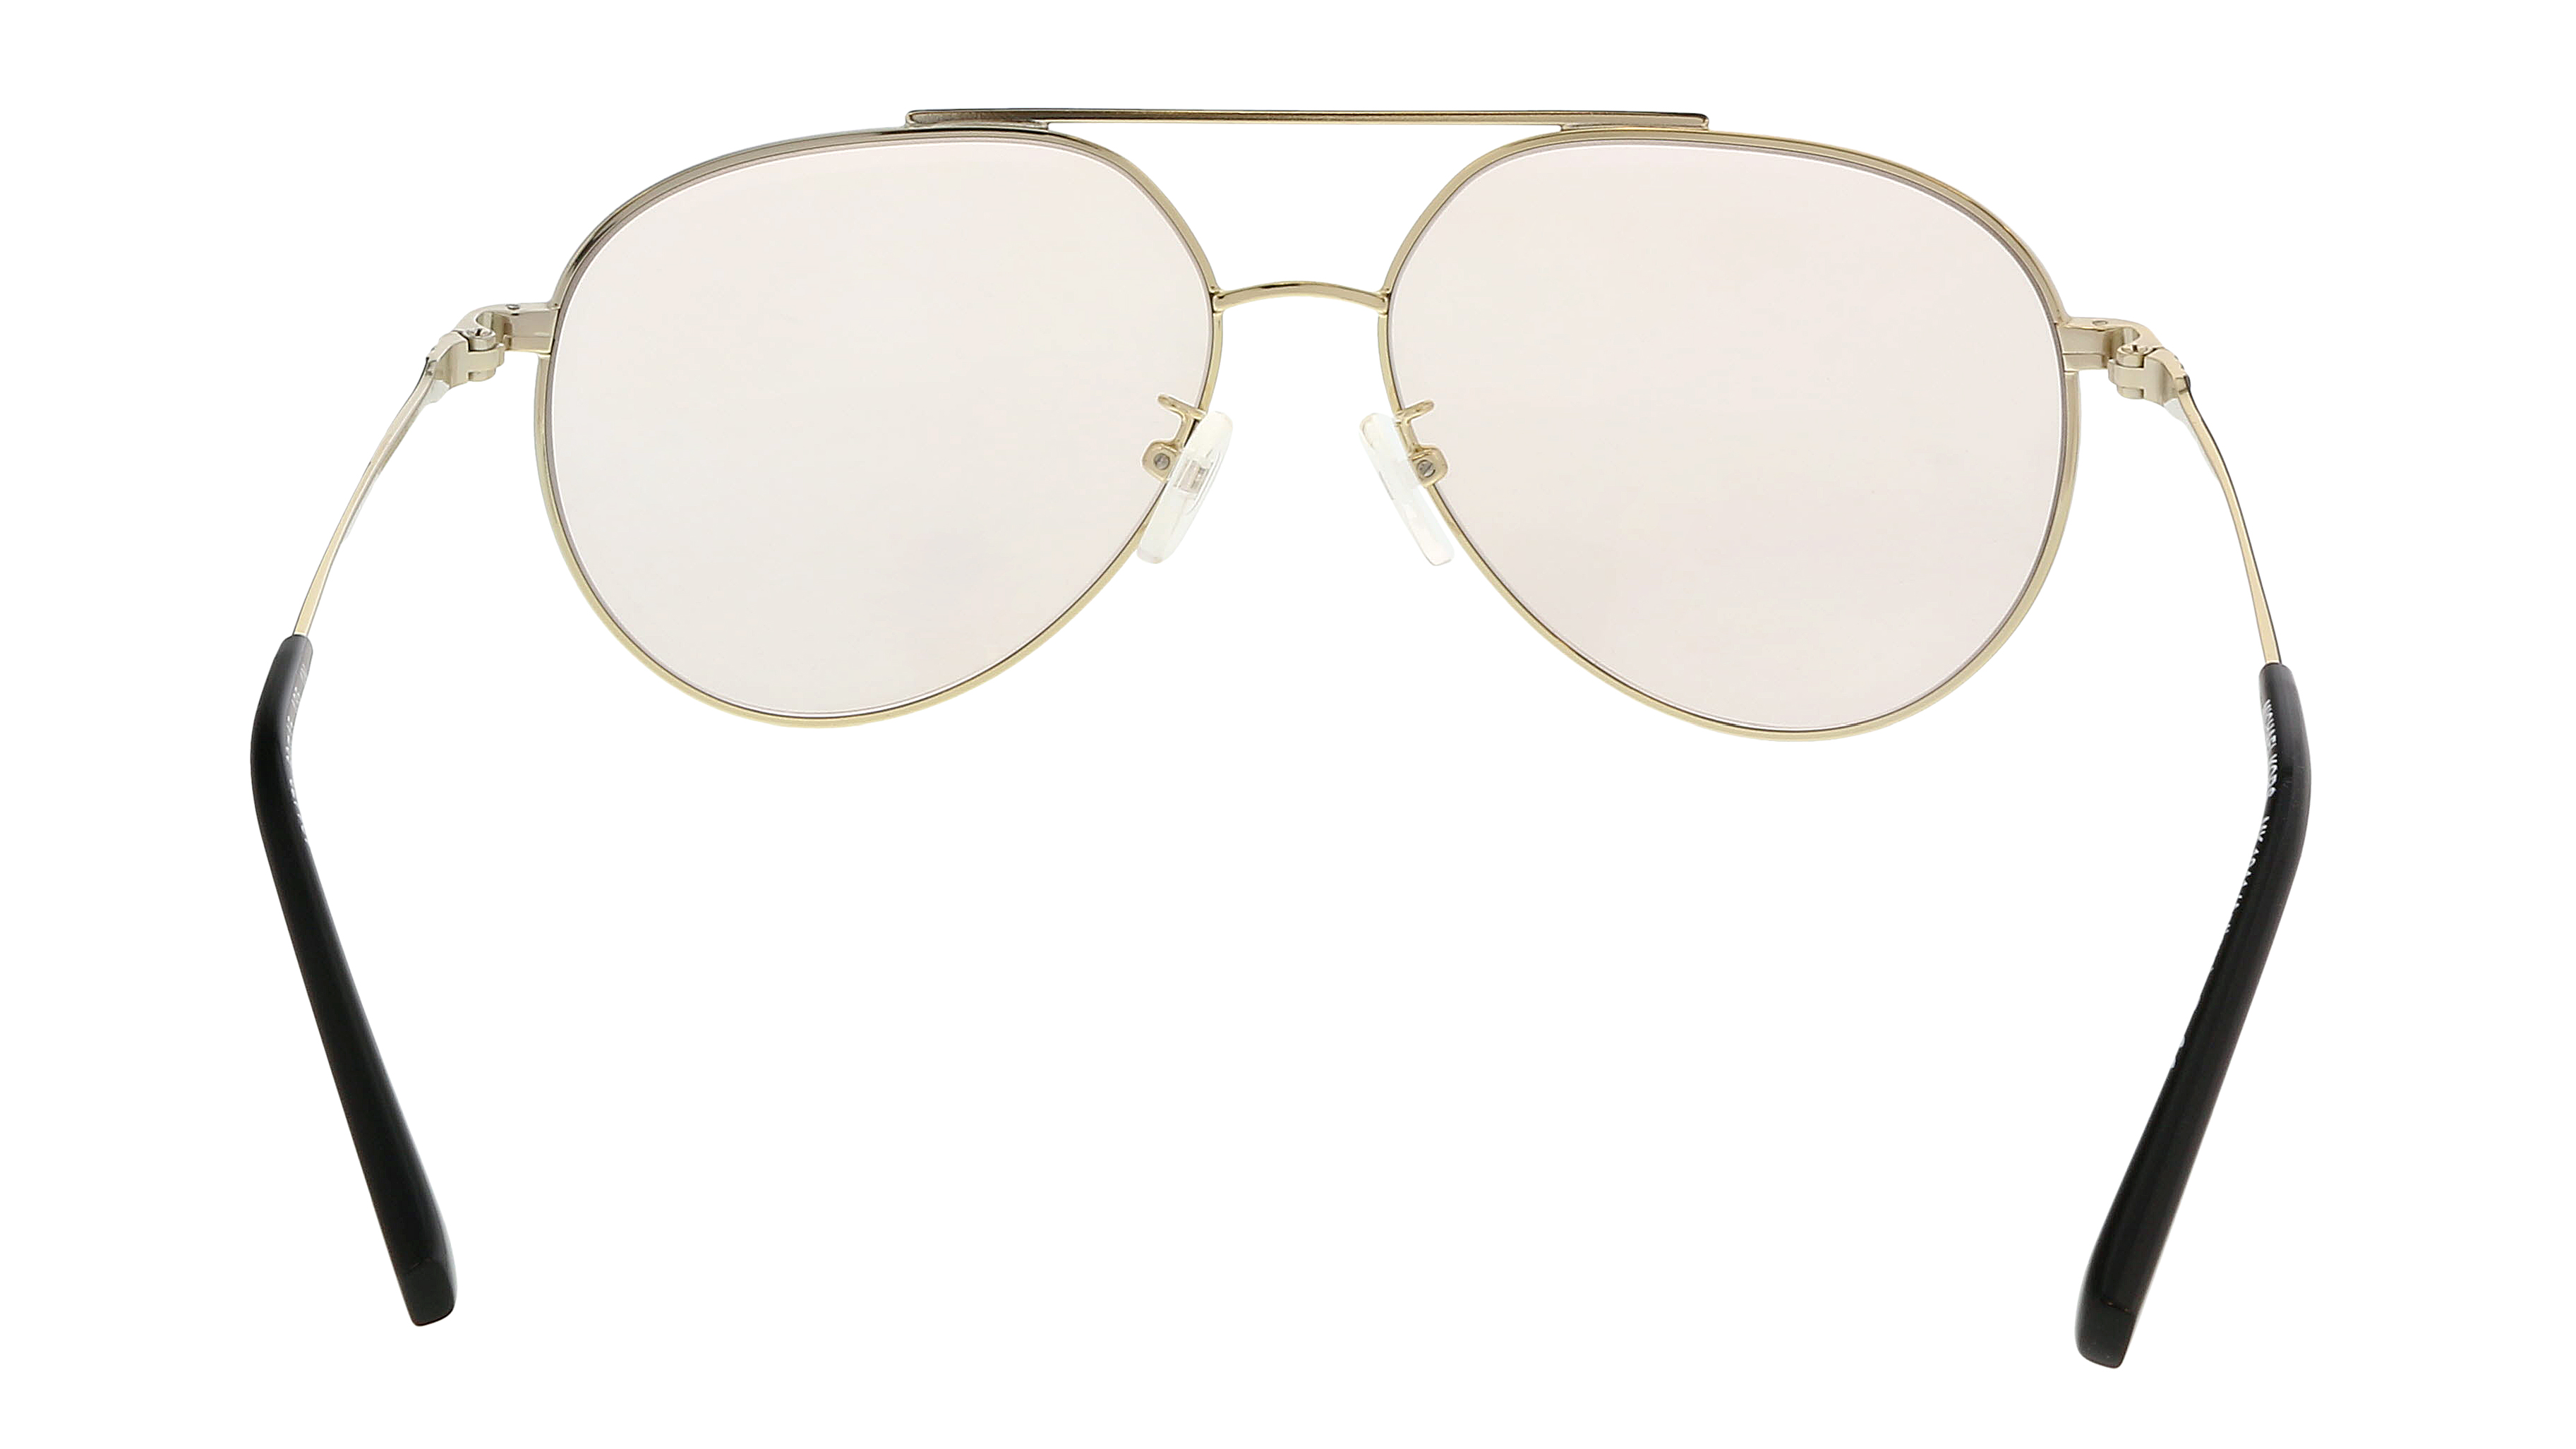 Michael Kors ANTIGUA MK1041 Sunglasses 101473-60 - Men's, Shiny Pale Gold Frame, MK1041-101473-60 - image 4 of 5